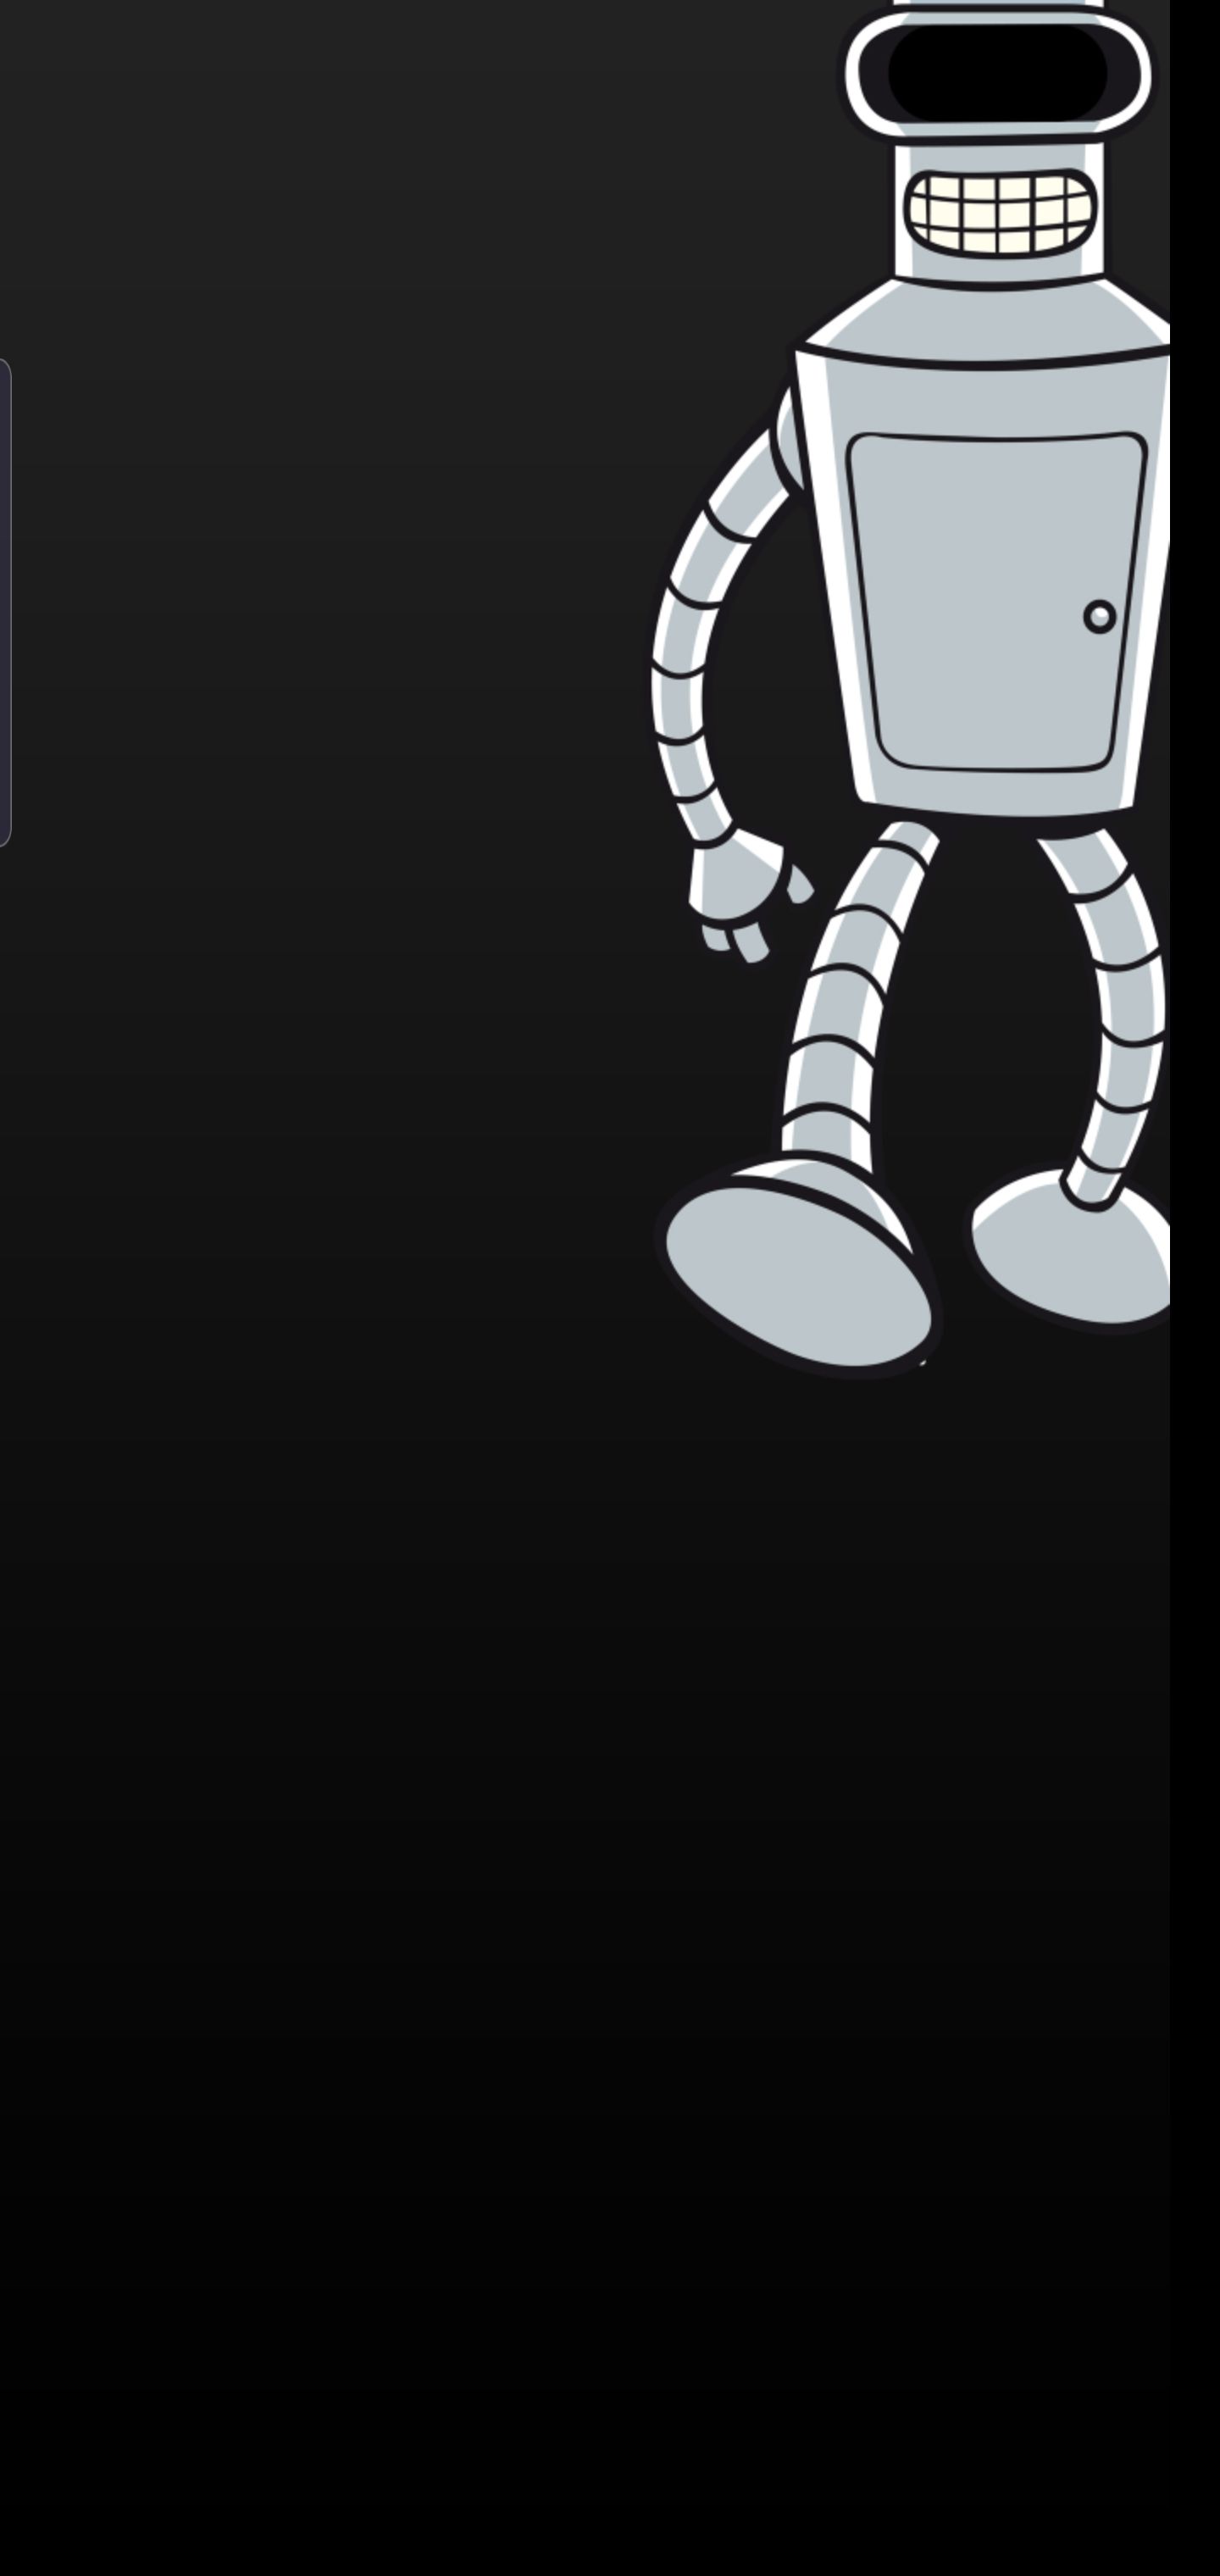 Bender, Futurama S10 5G Screensaver Wallpaper The Notch